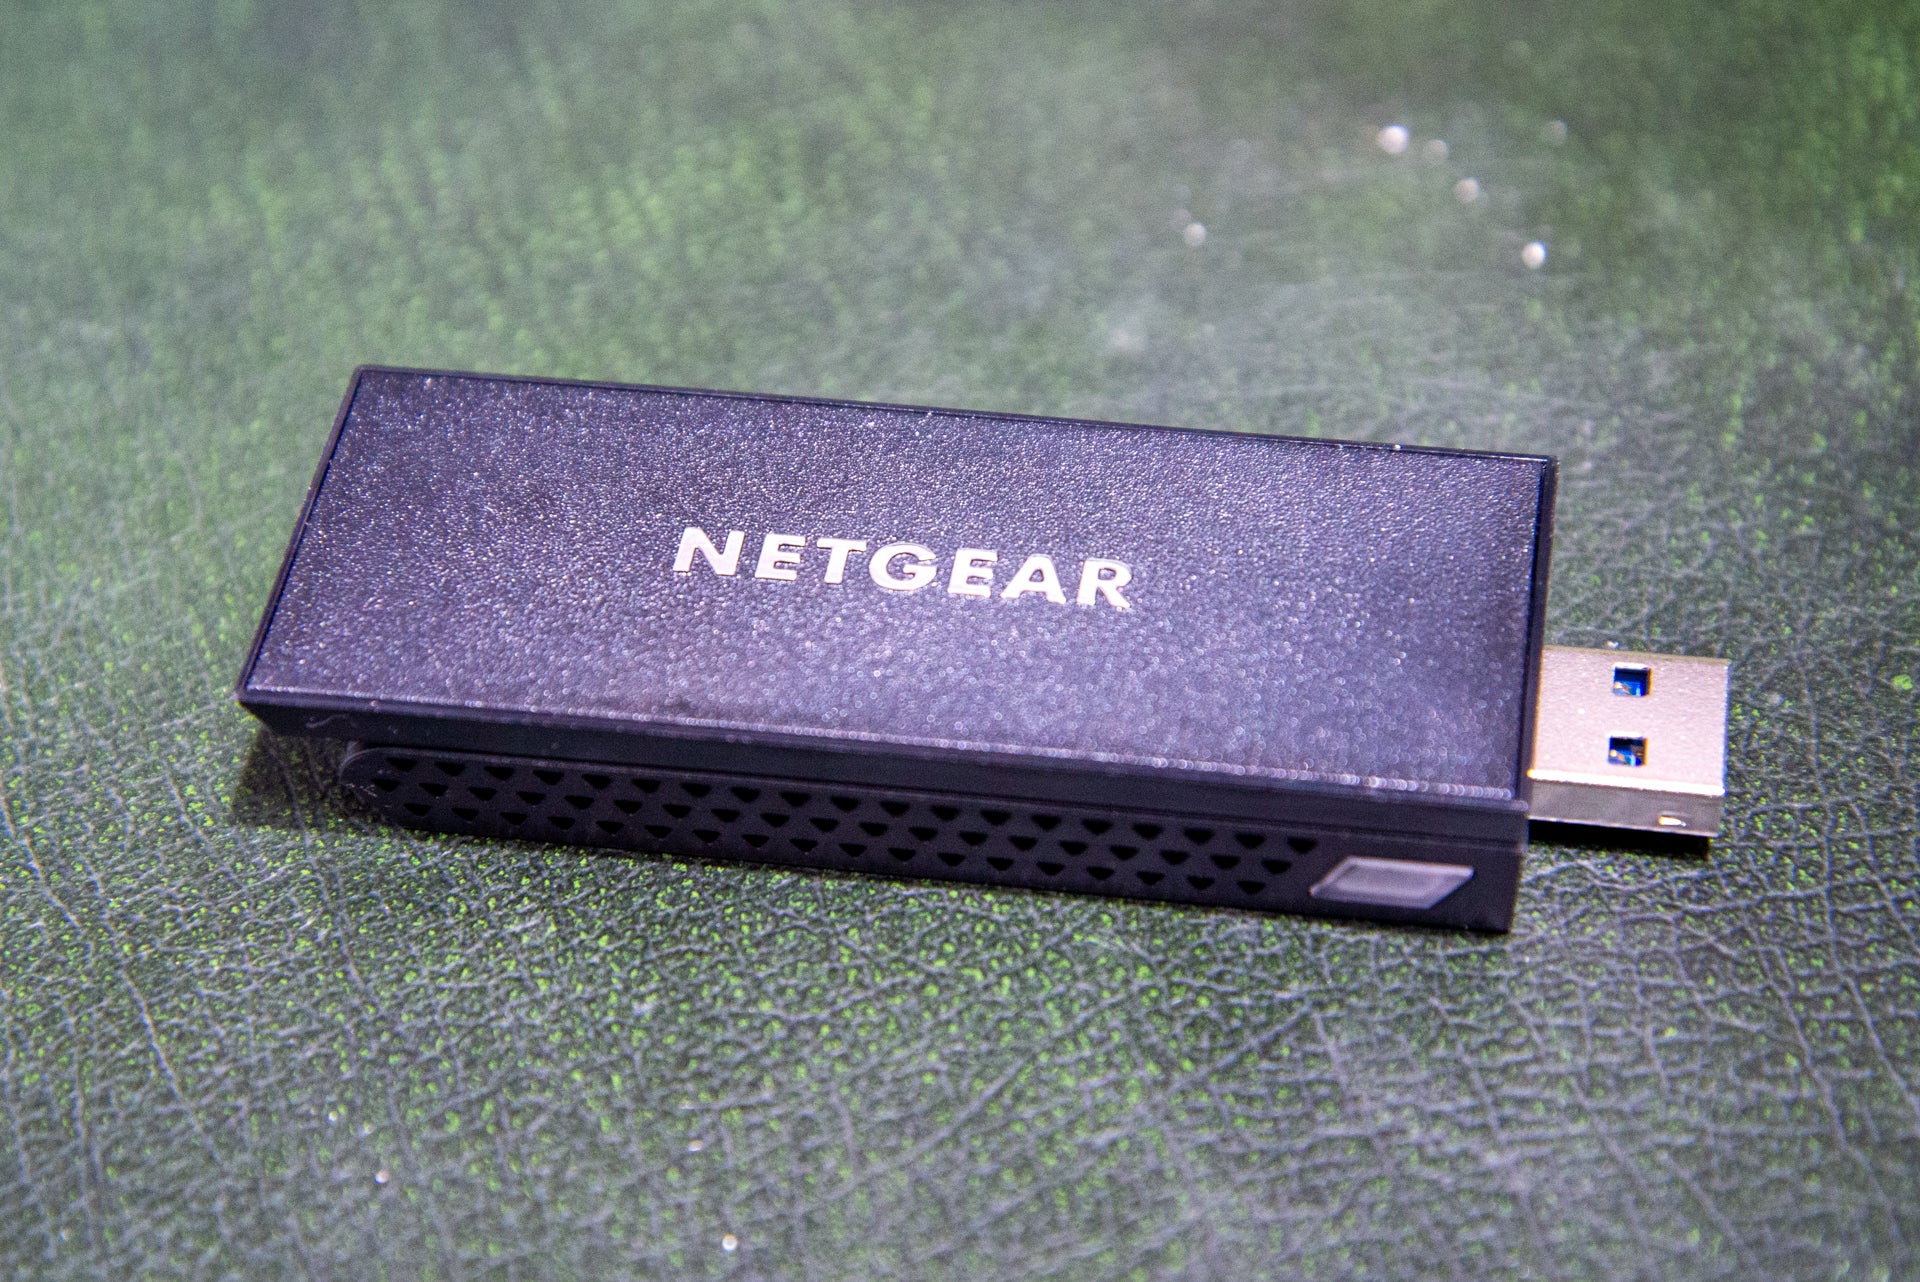 Netgear Nighthawk Tri-Band USB 3.0 WiFi Adapter A8000 dongle